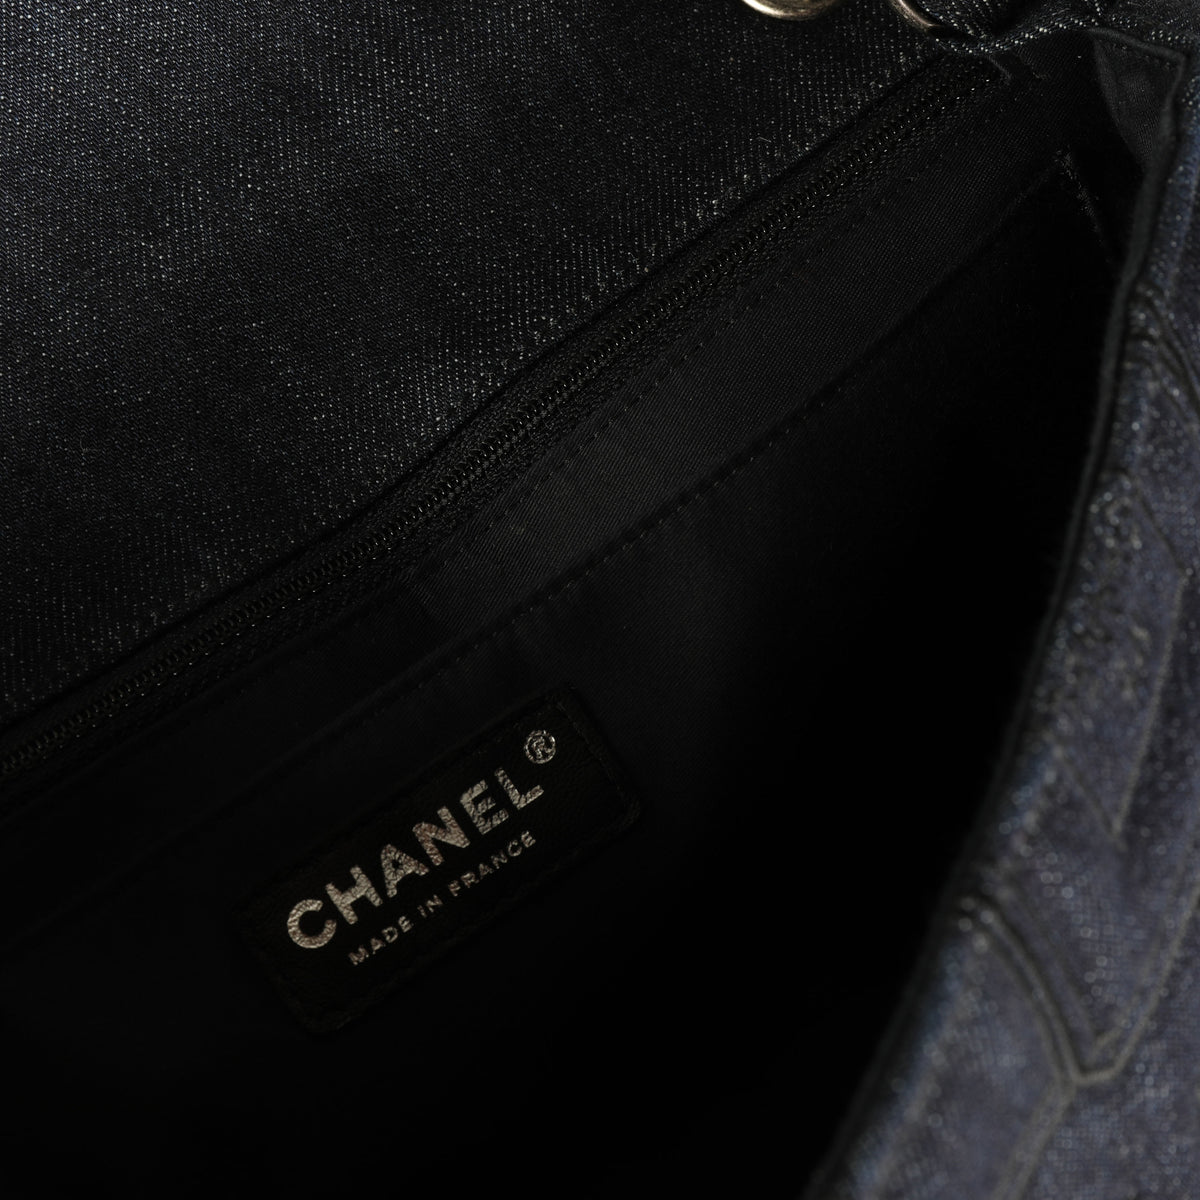 Chanel Blue Denim & Black Embroidery Jumbo Perfume Bottle Flap Bag